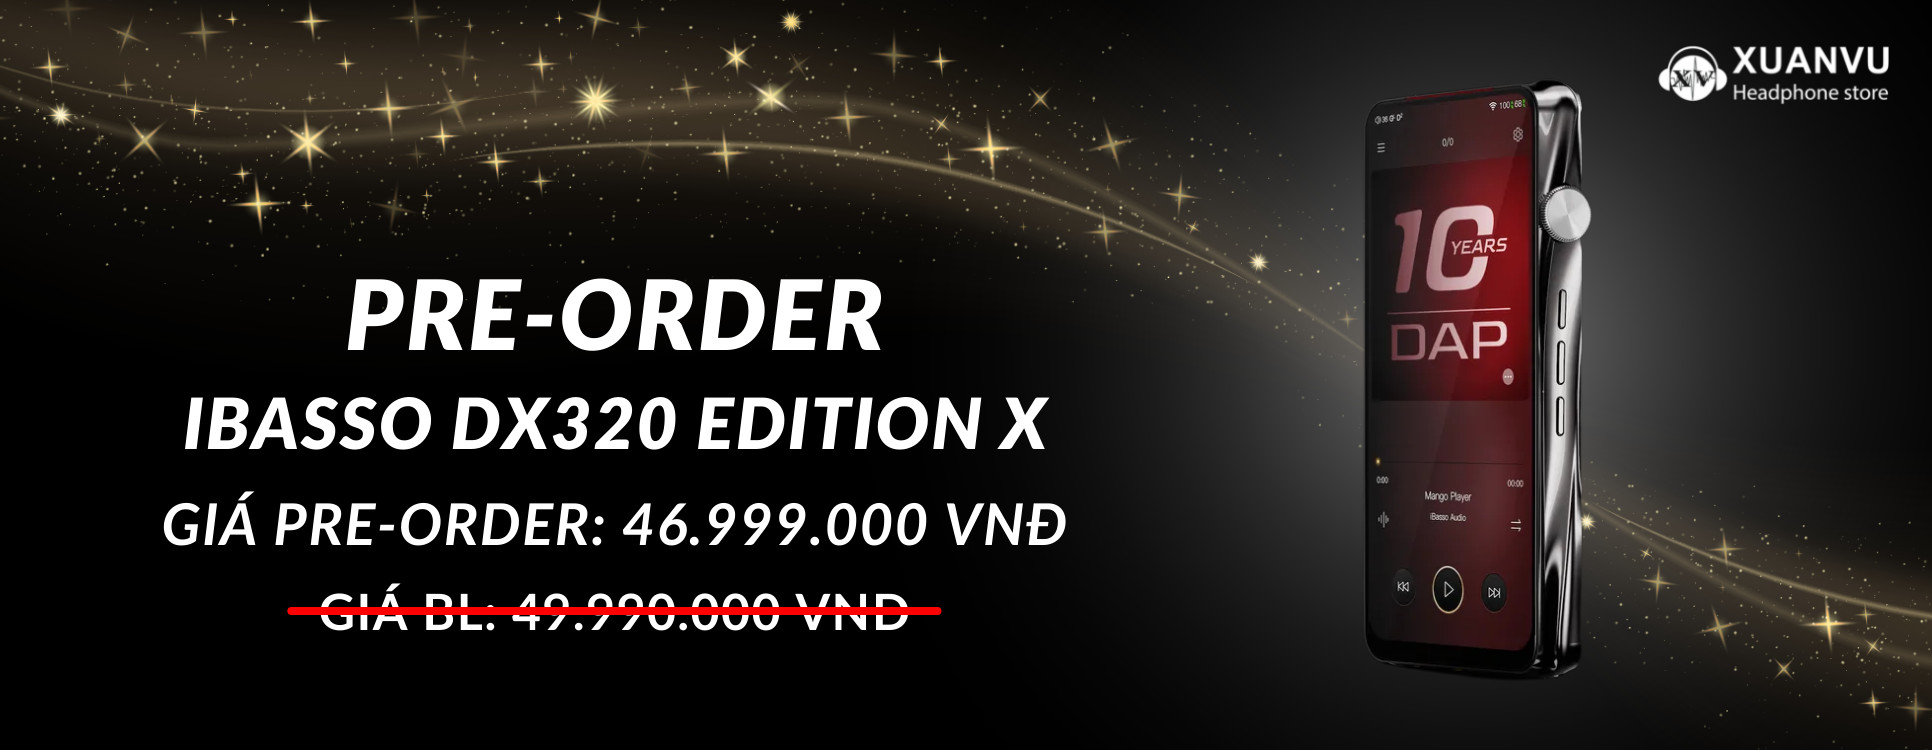 Pre-order DAP iBasso DX320 Edition X